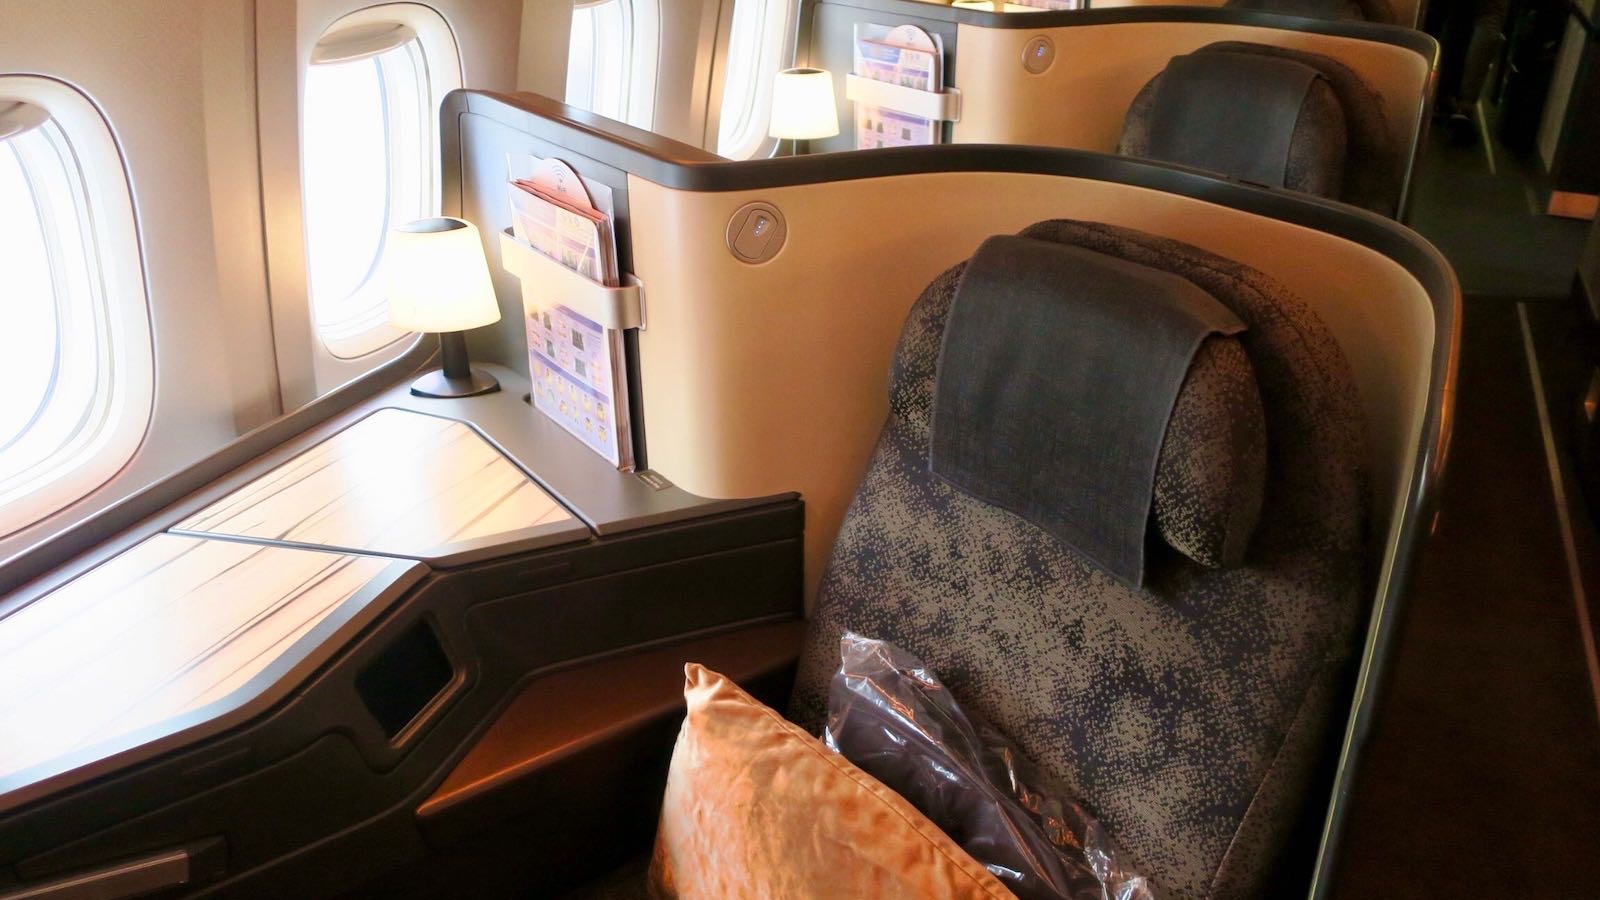 air china 777 business class seats